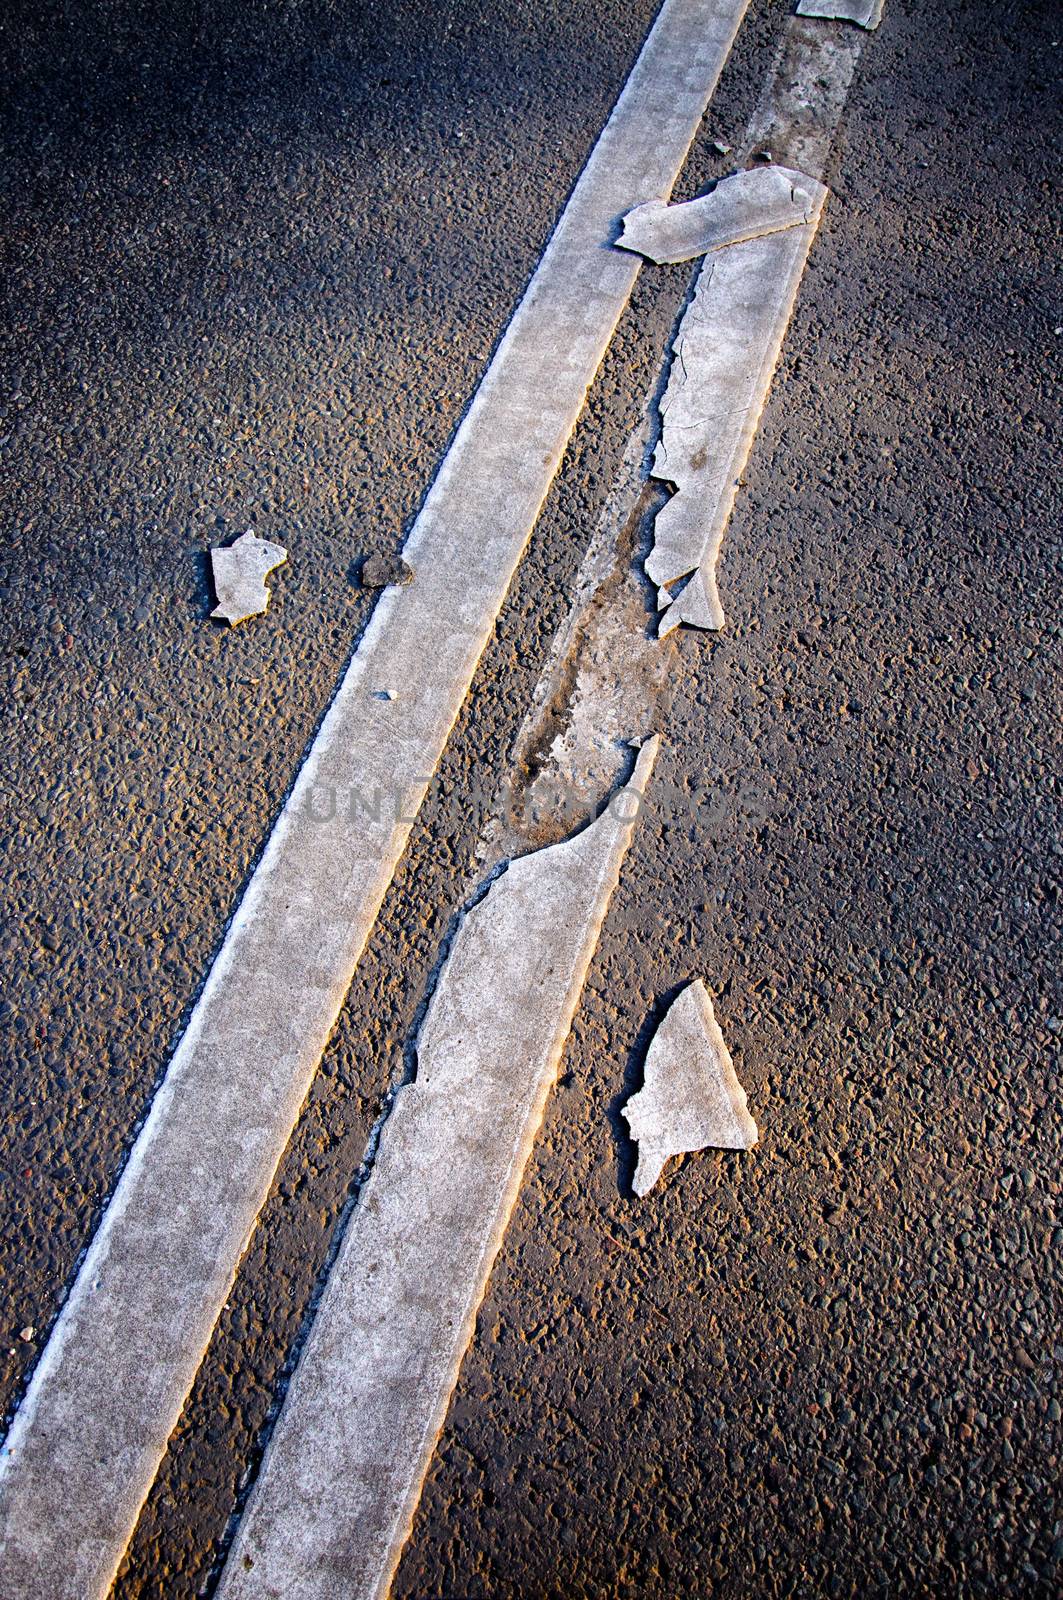 Brocken line of an asphalt road marking close-up.